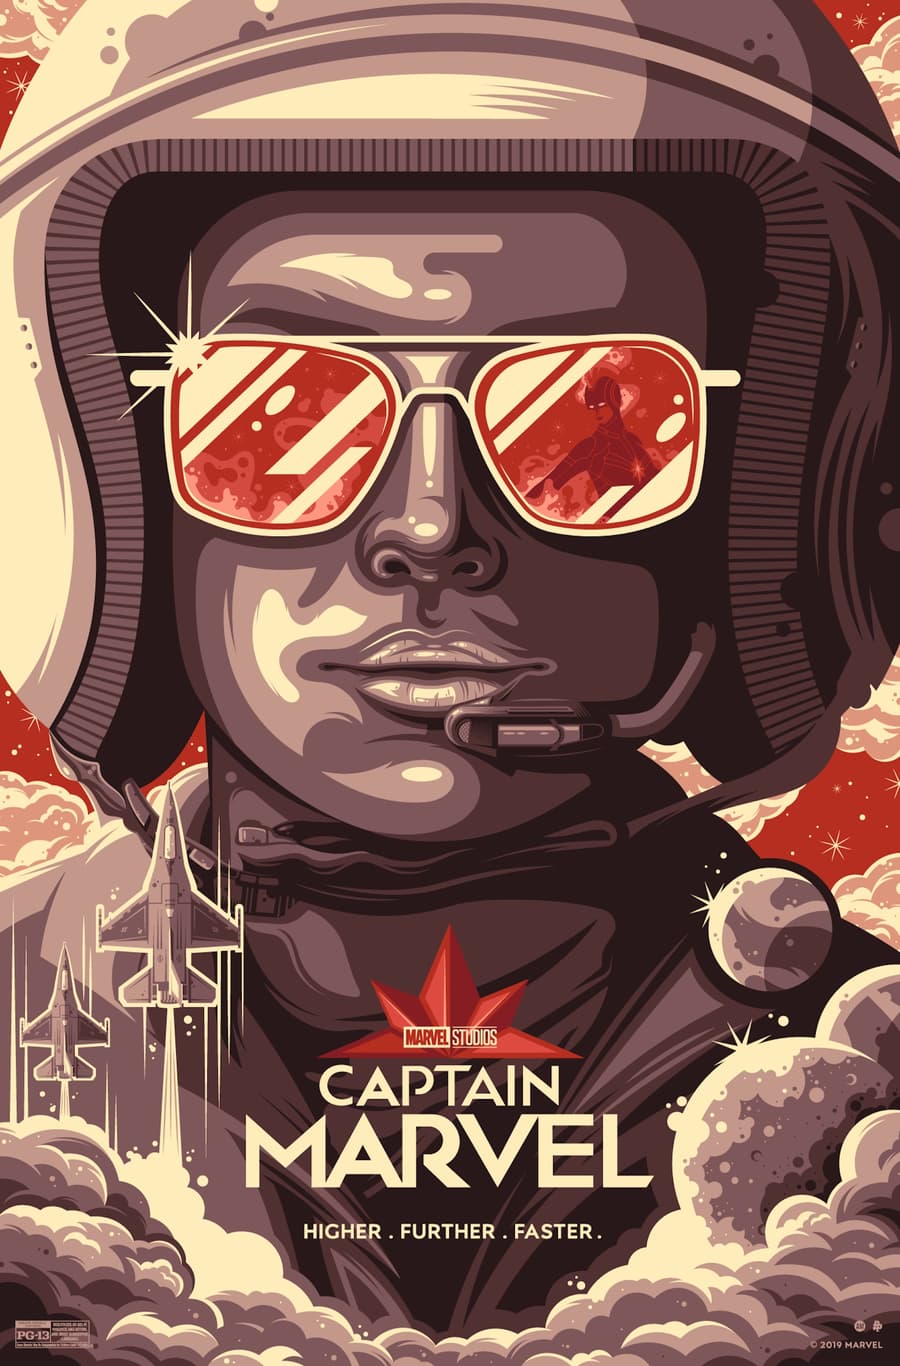 Captain Marvel Poster Art by Aracely Munoz